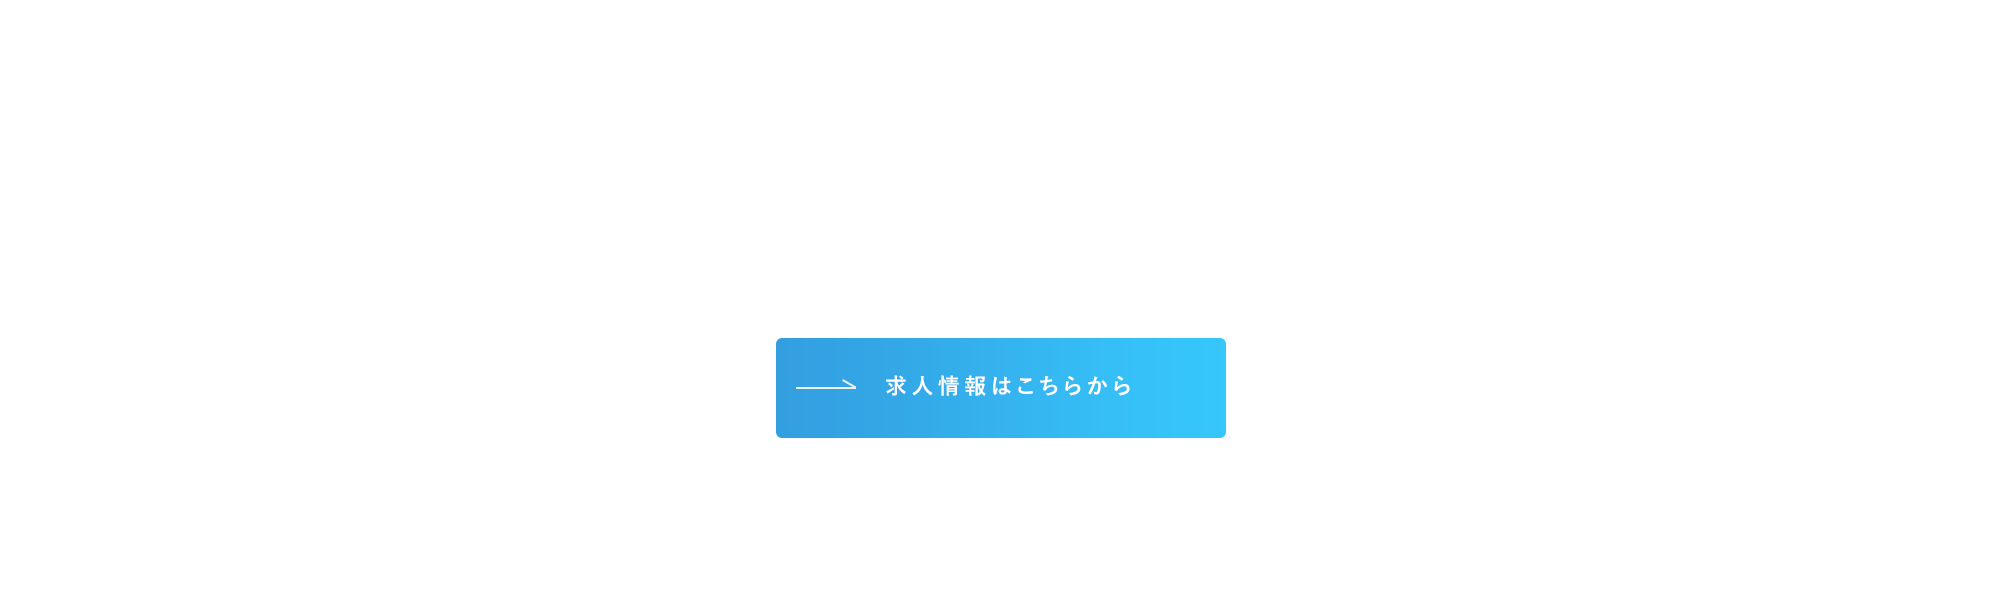 banner_recruit_txt